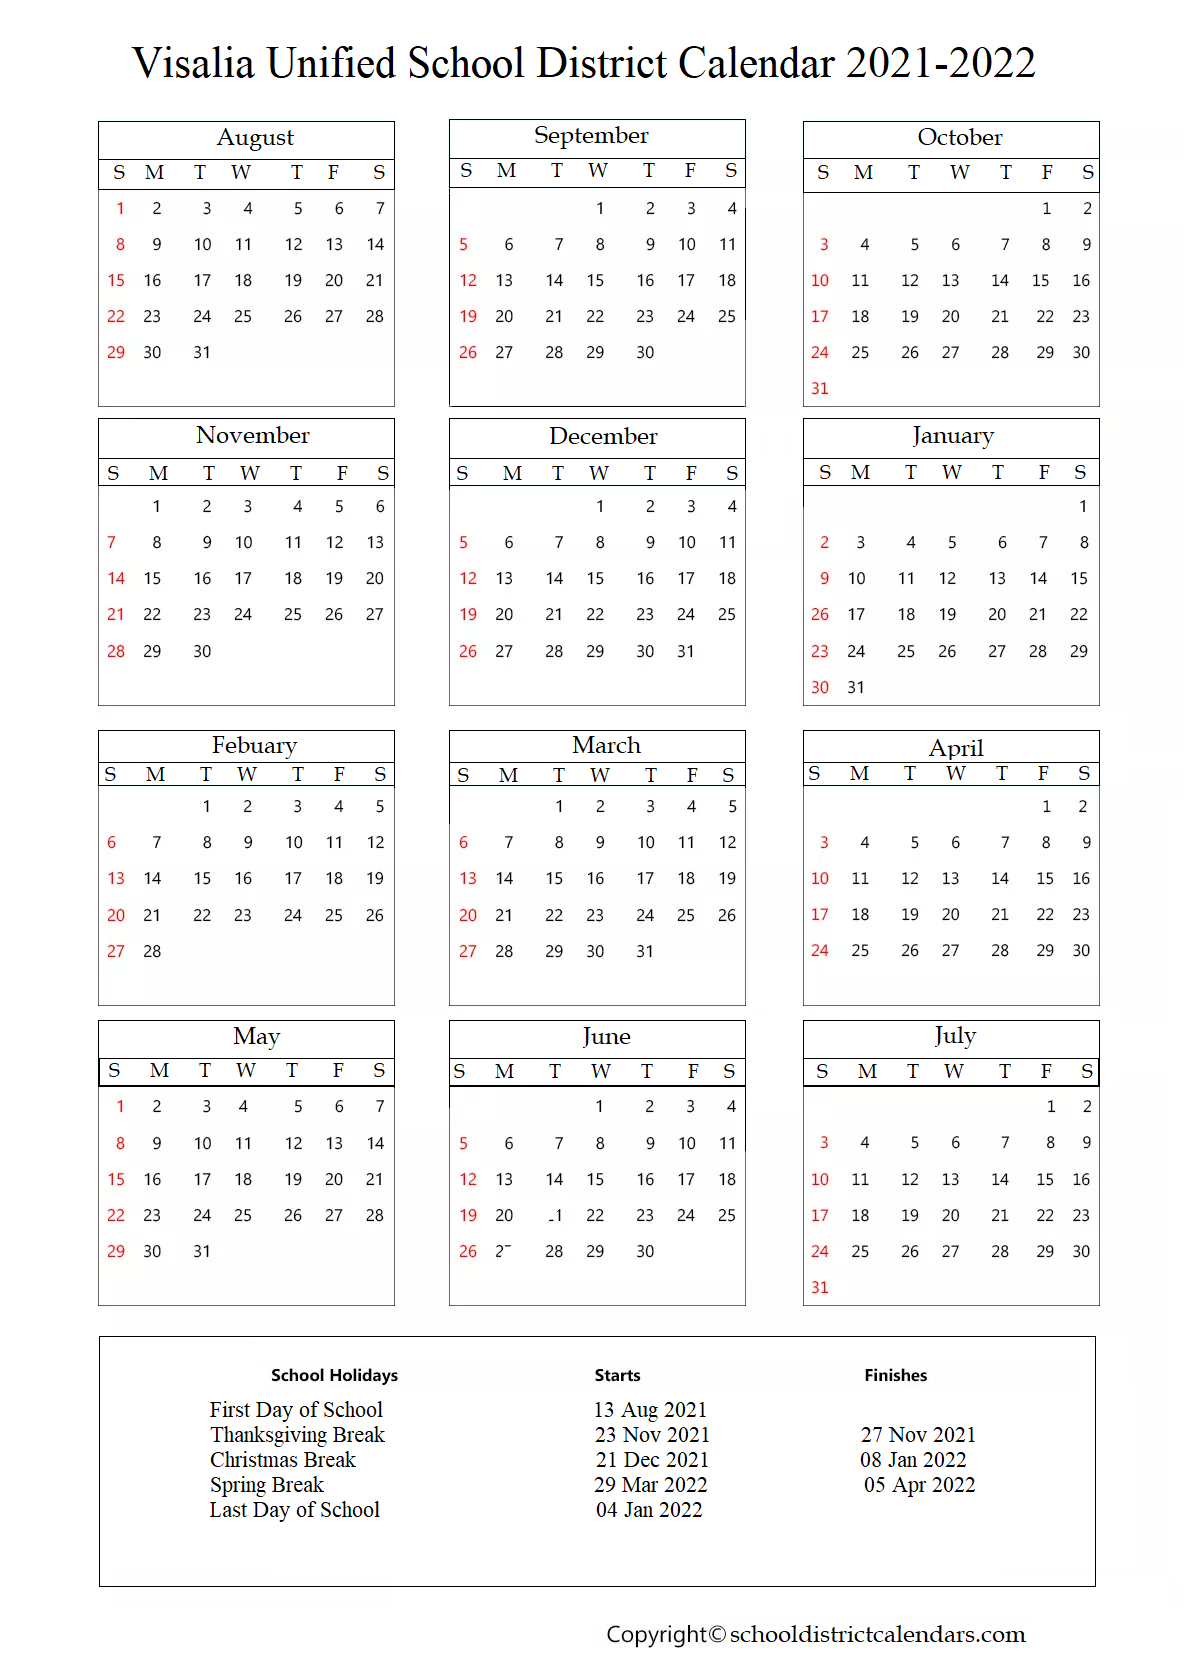 Visalia Unified School District Calendar 2021-2022 With